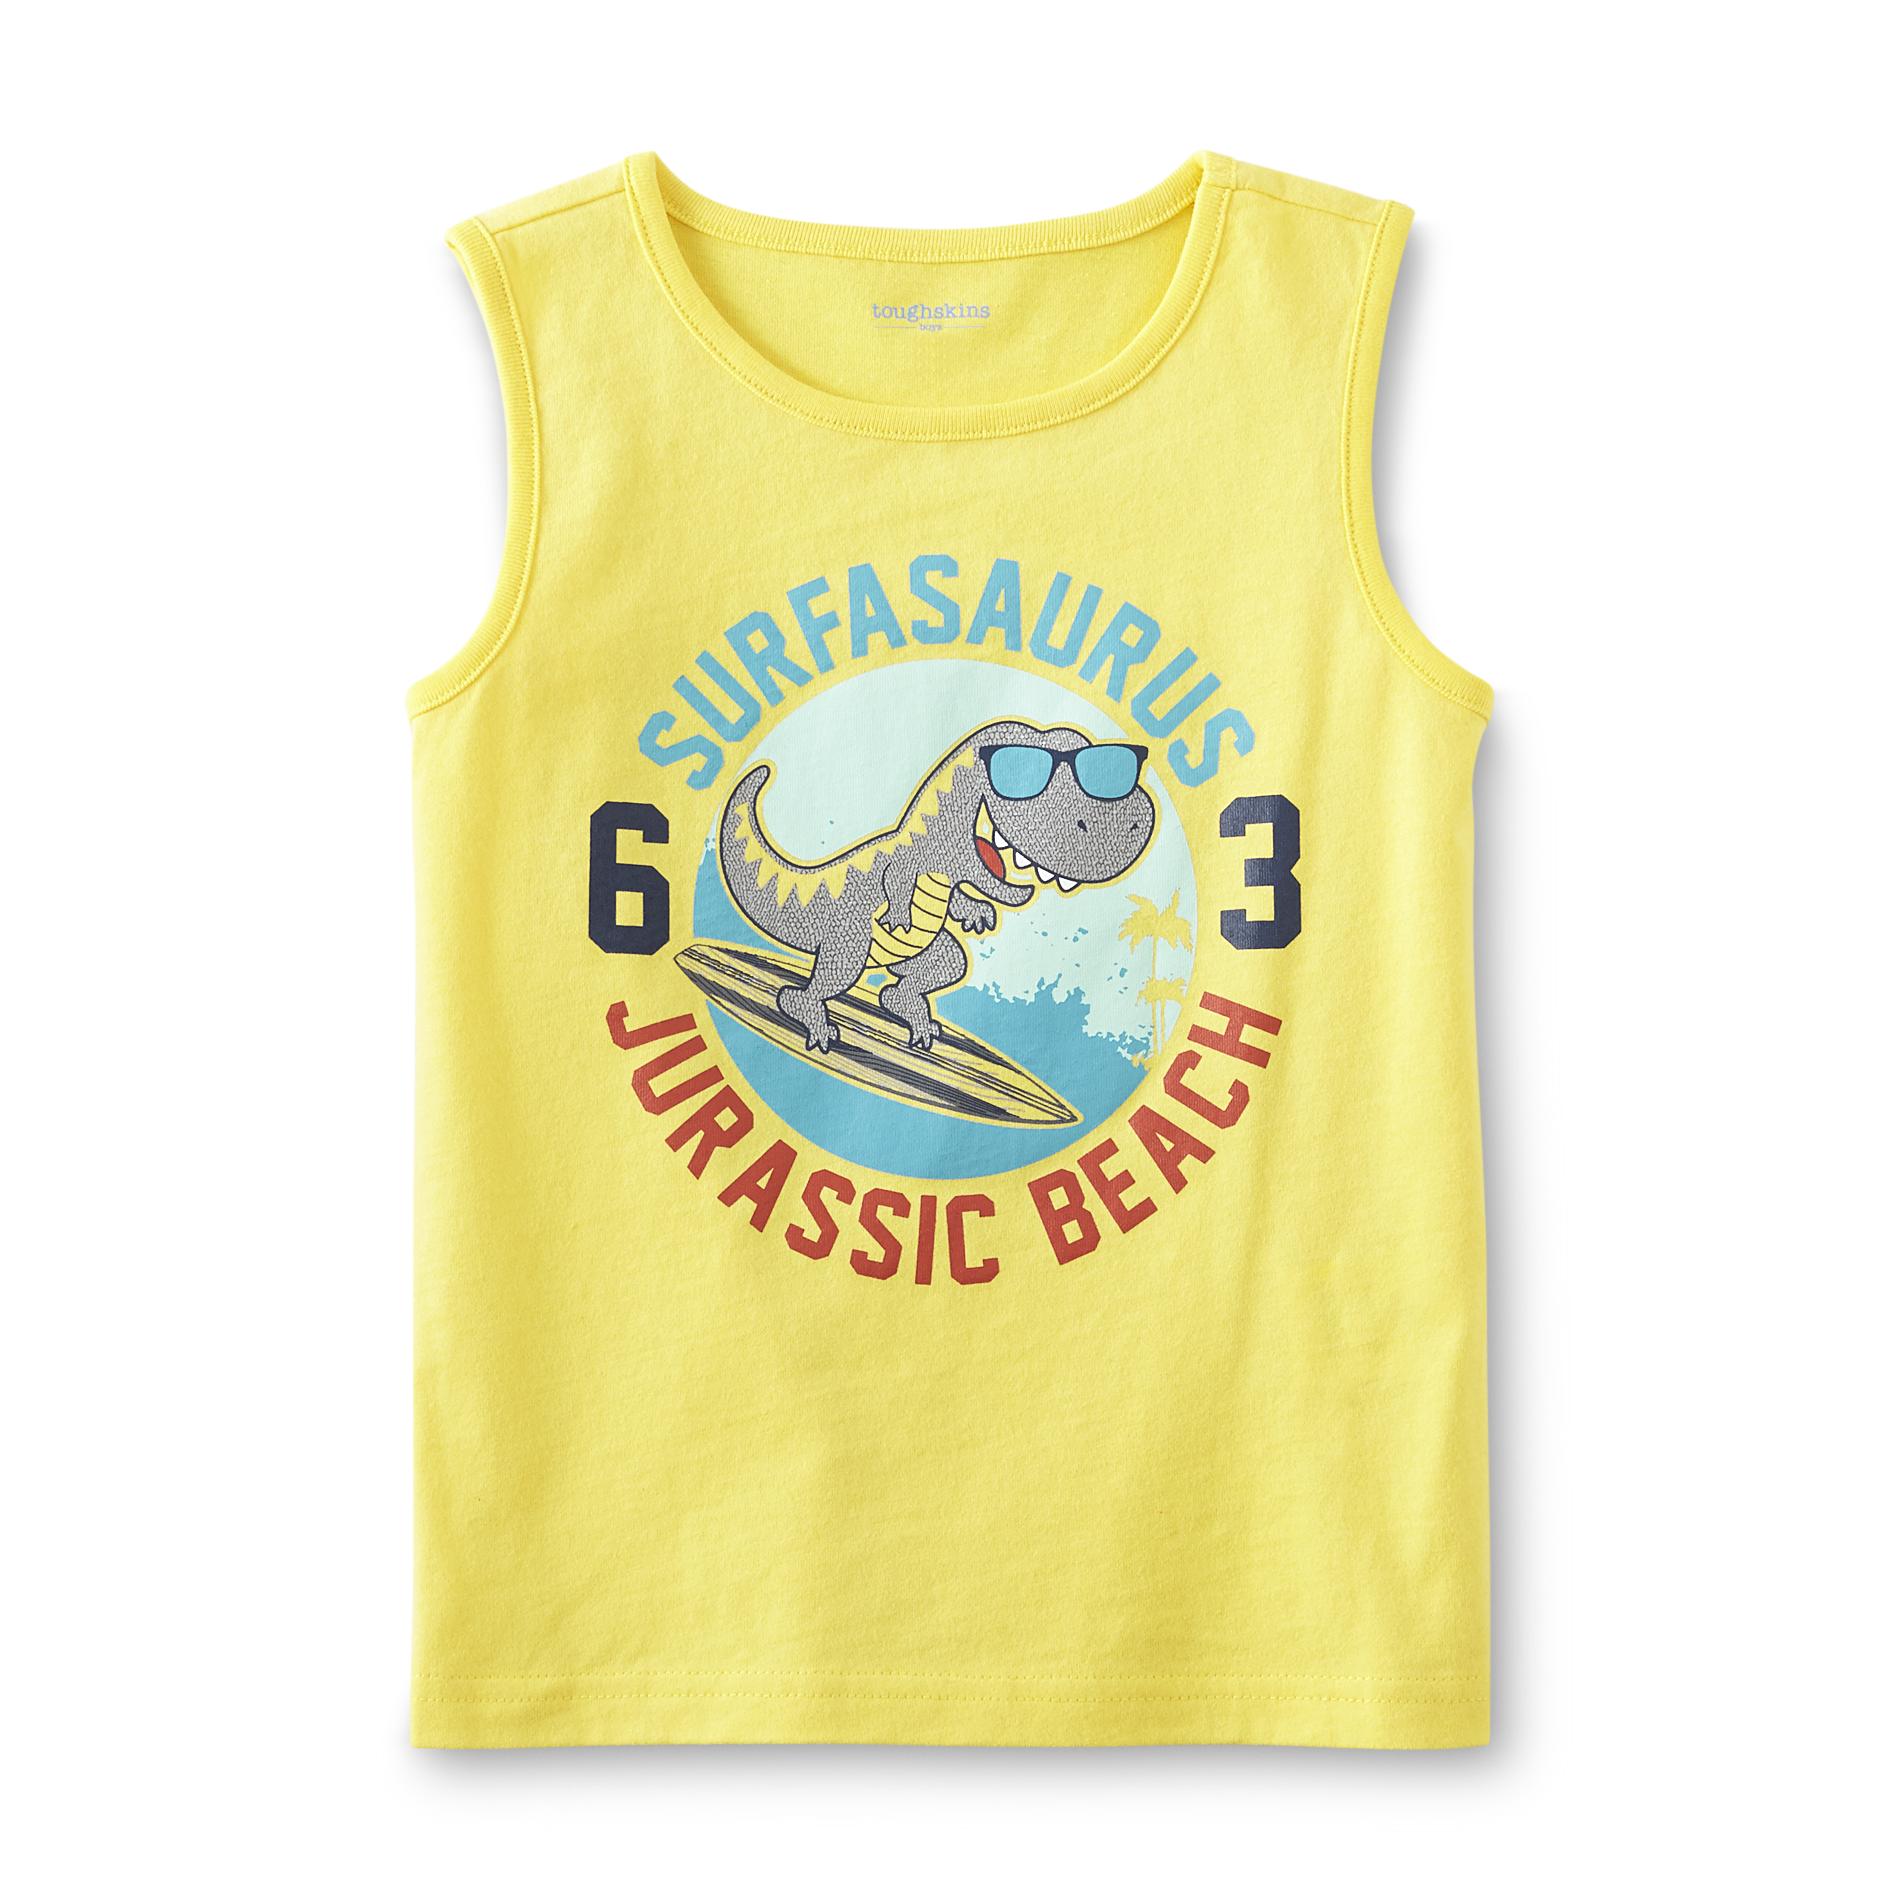 Toughskins Infant & Toddler Boy's Sleeveless T-Shirt - Dinosaur